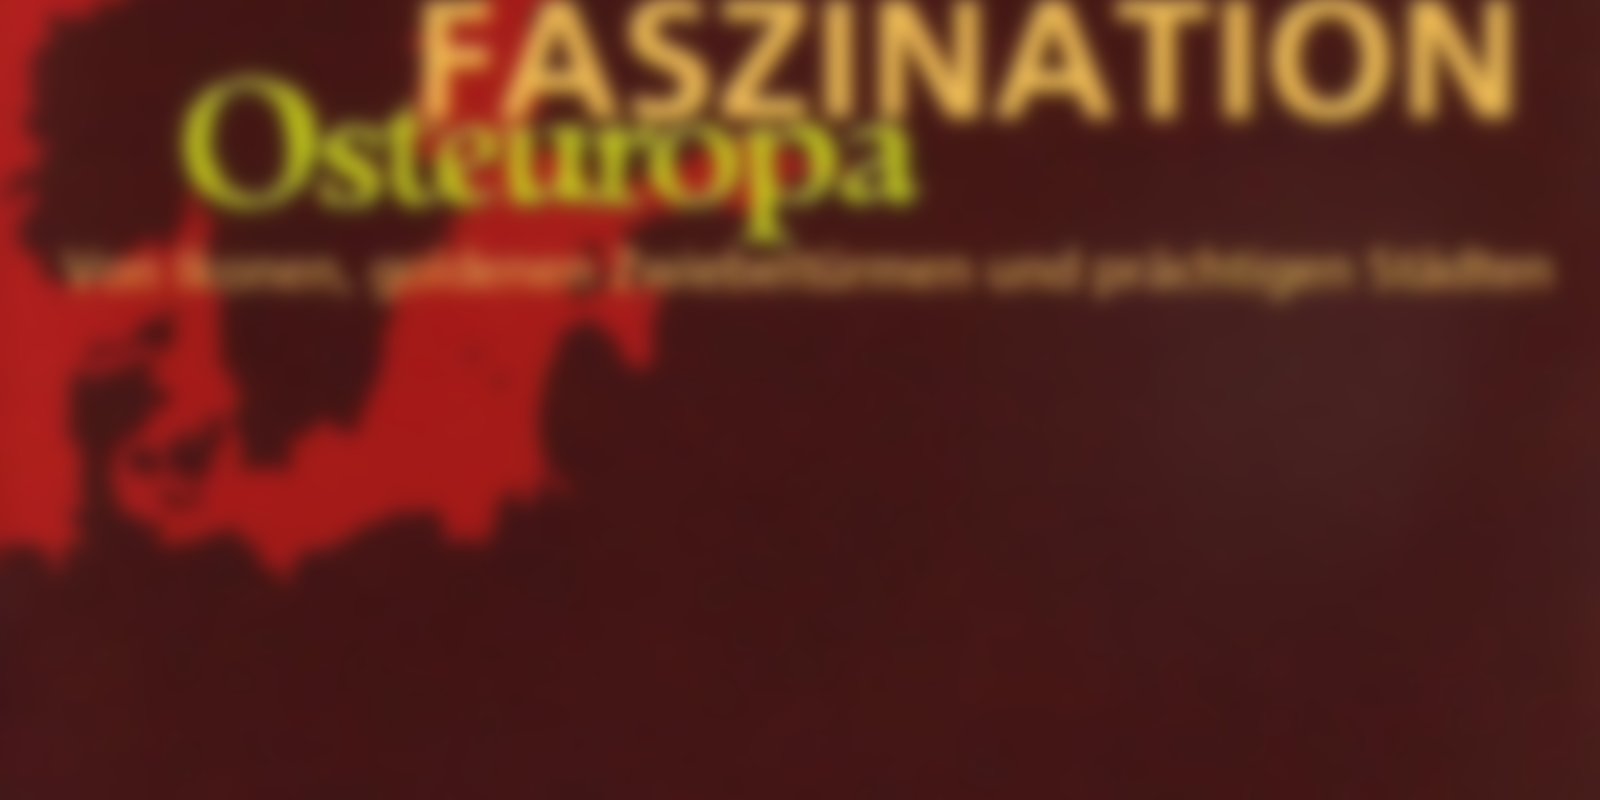 Faszination Osteuropa